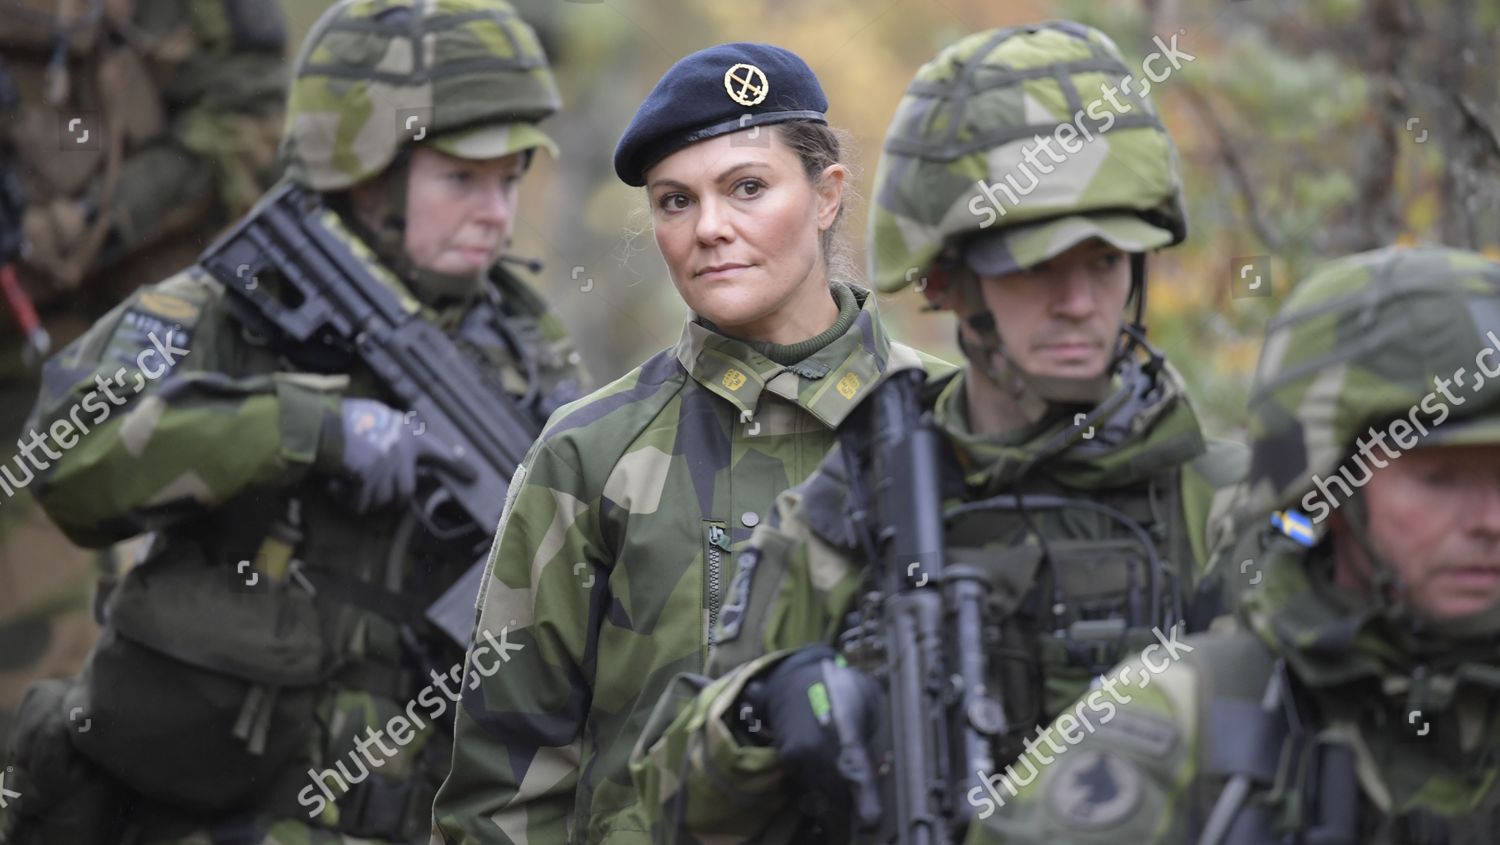 crown-princess-victoria-visits-the-swedish-home-guard-salenfjallen-sweden-shutterstock-editorial-12502339a.jpg